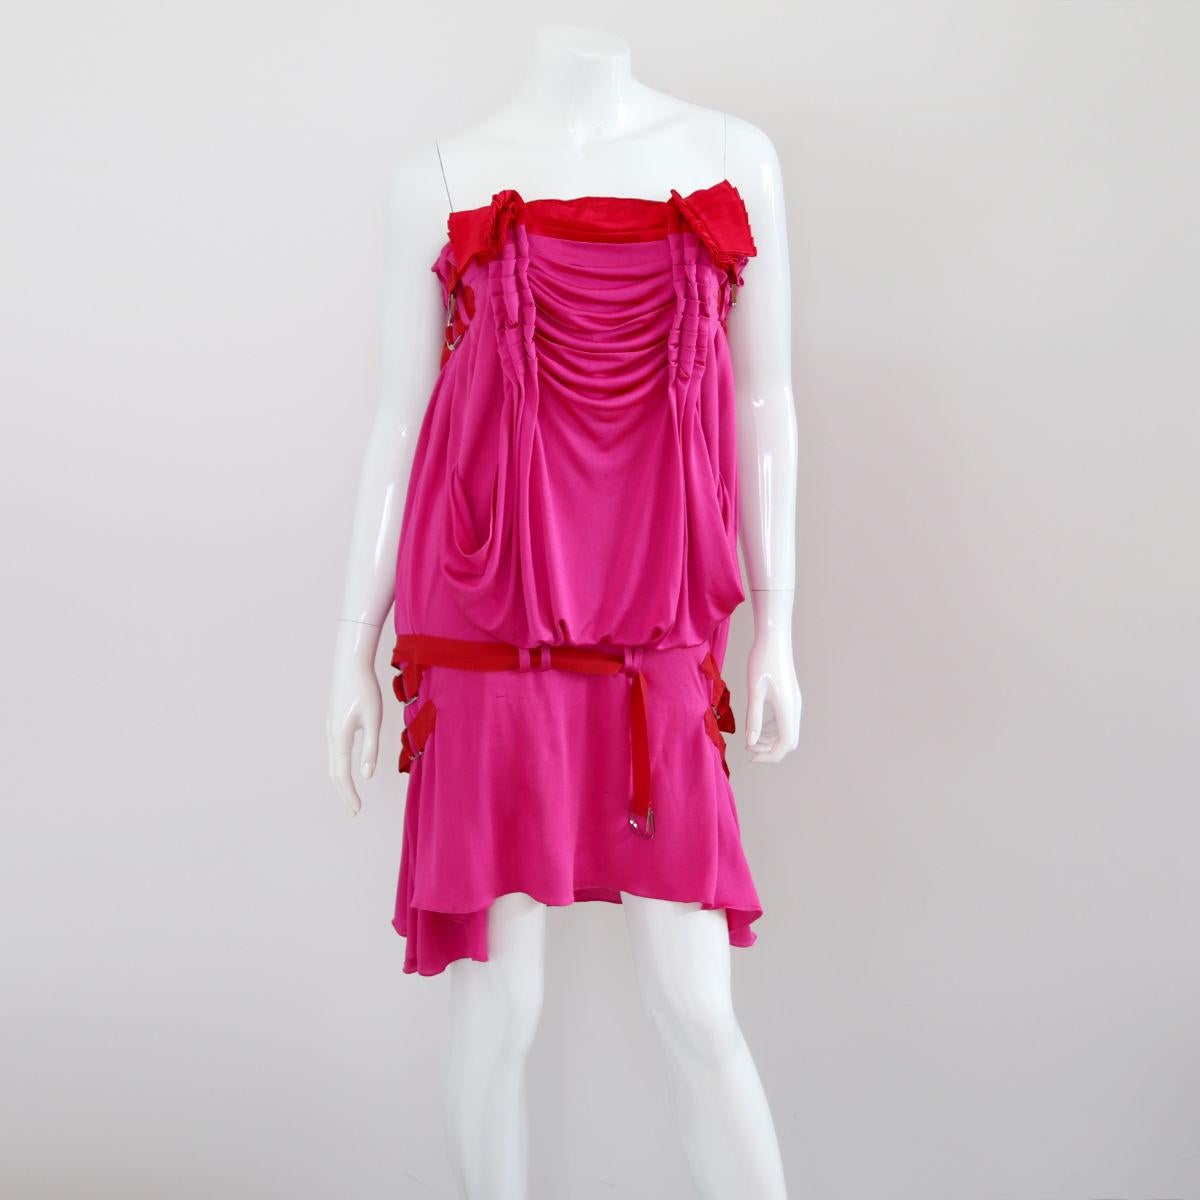 CHRISTIAN DIOR 2003 Rare Pink Red Silk Dress by John Galliano Runway S/S 1